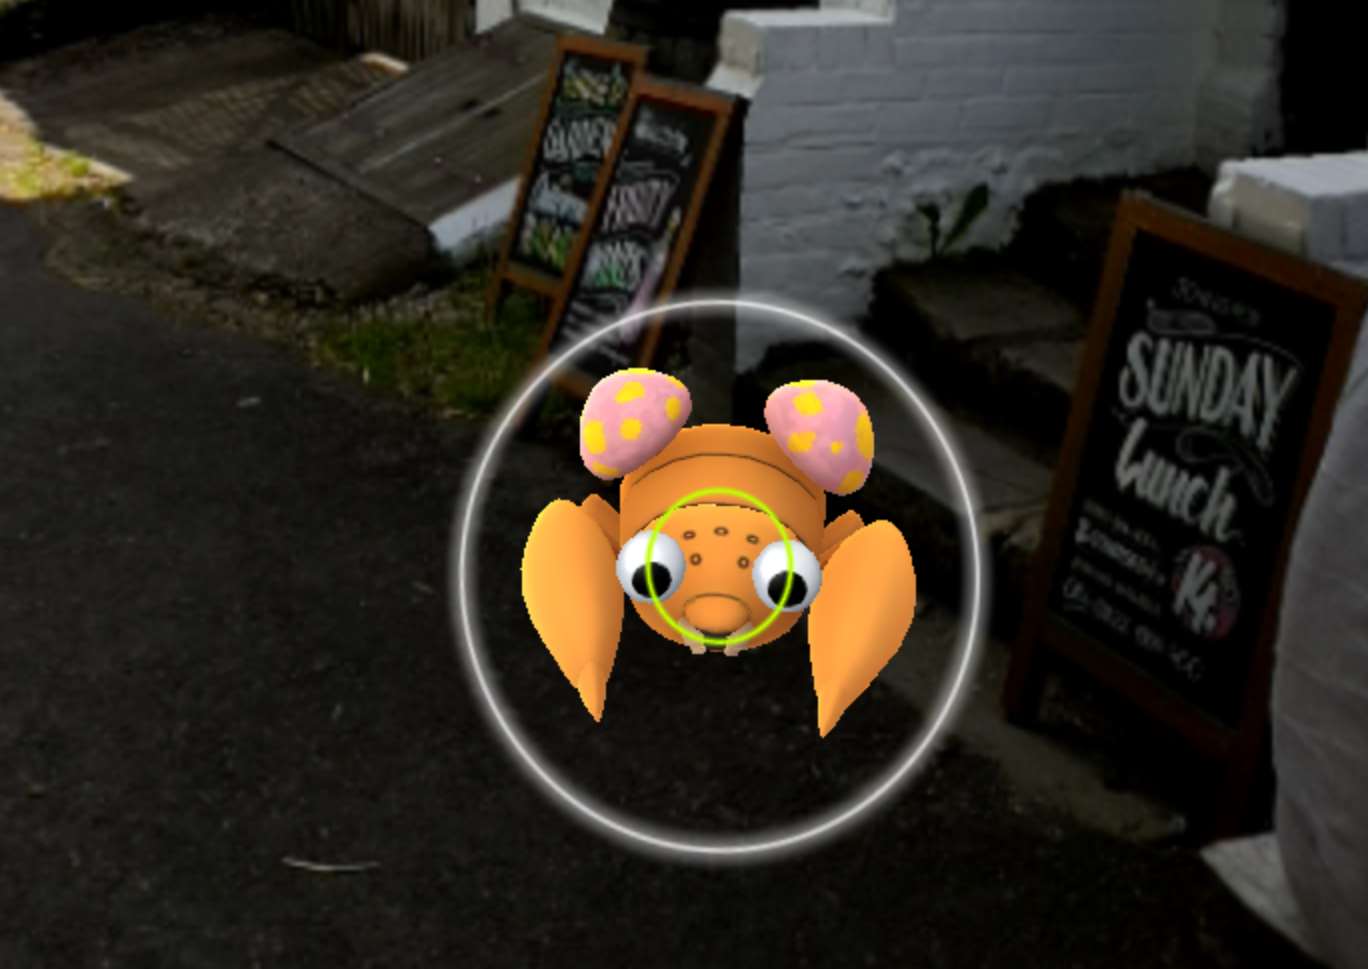 A Pokémon outside The Ringlestone Inn